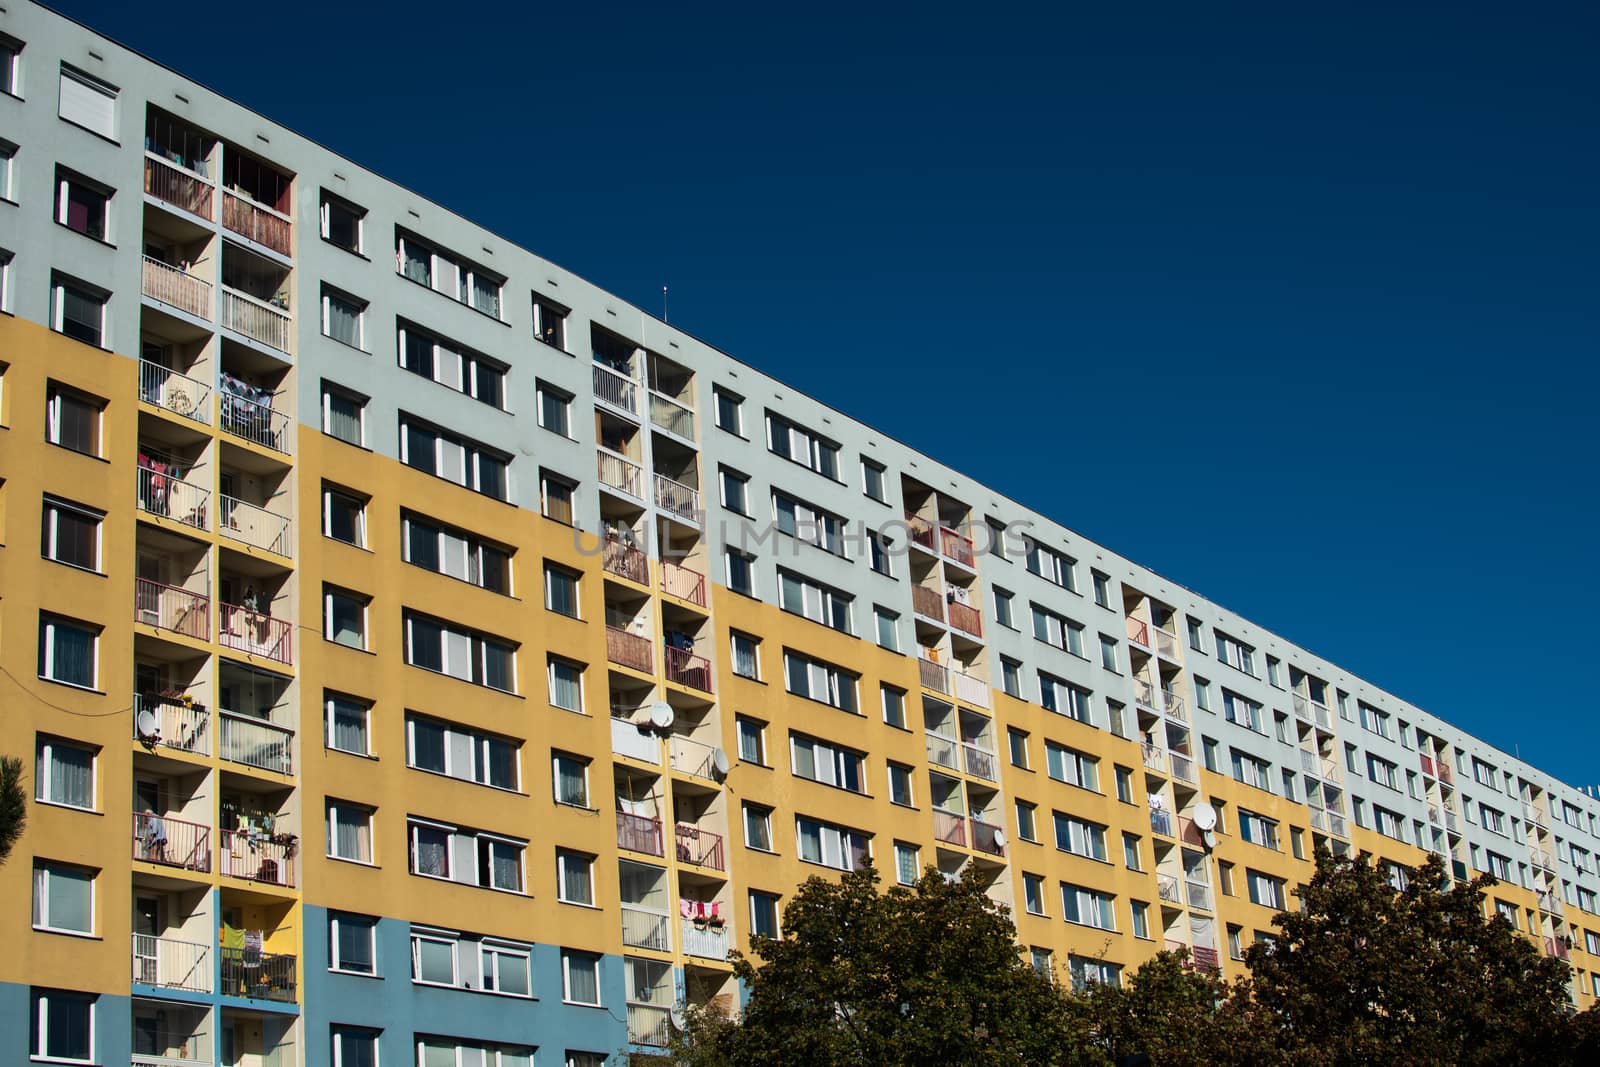 Concrete building communist blocks ("panelak") in Petrini or Petrin, Prague.